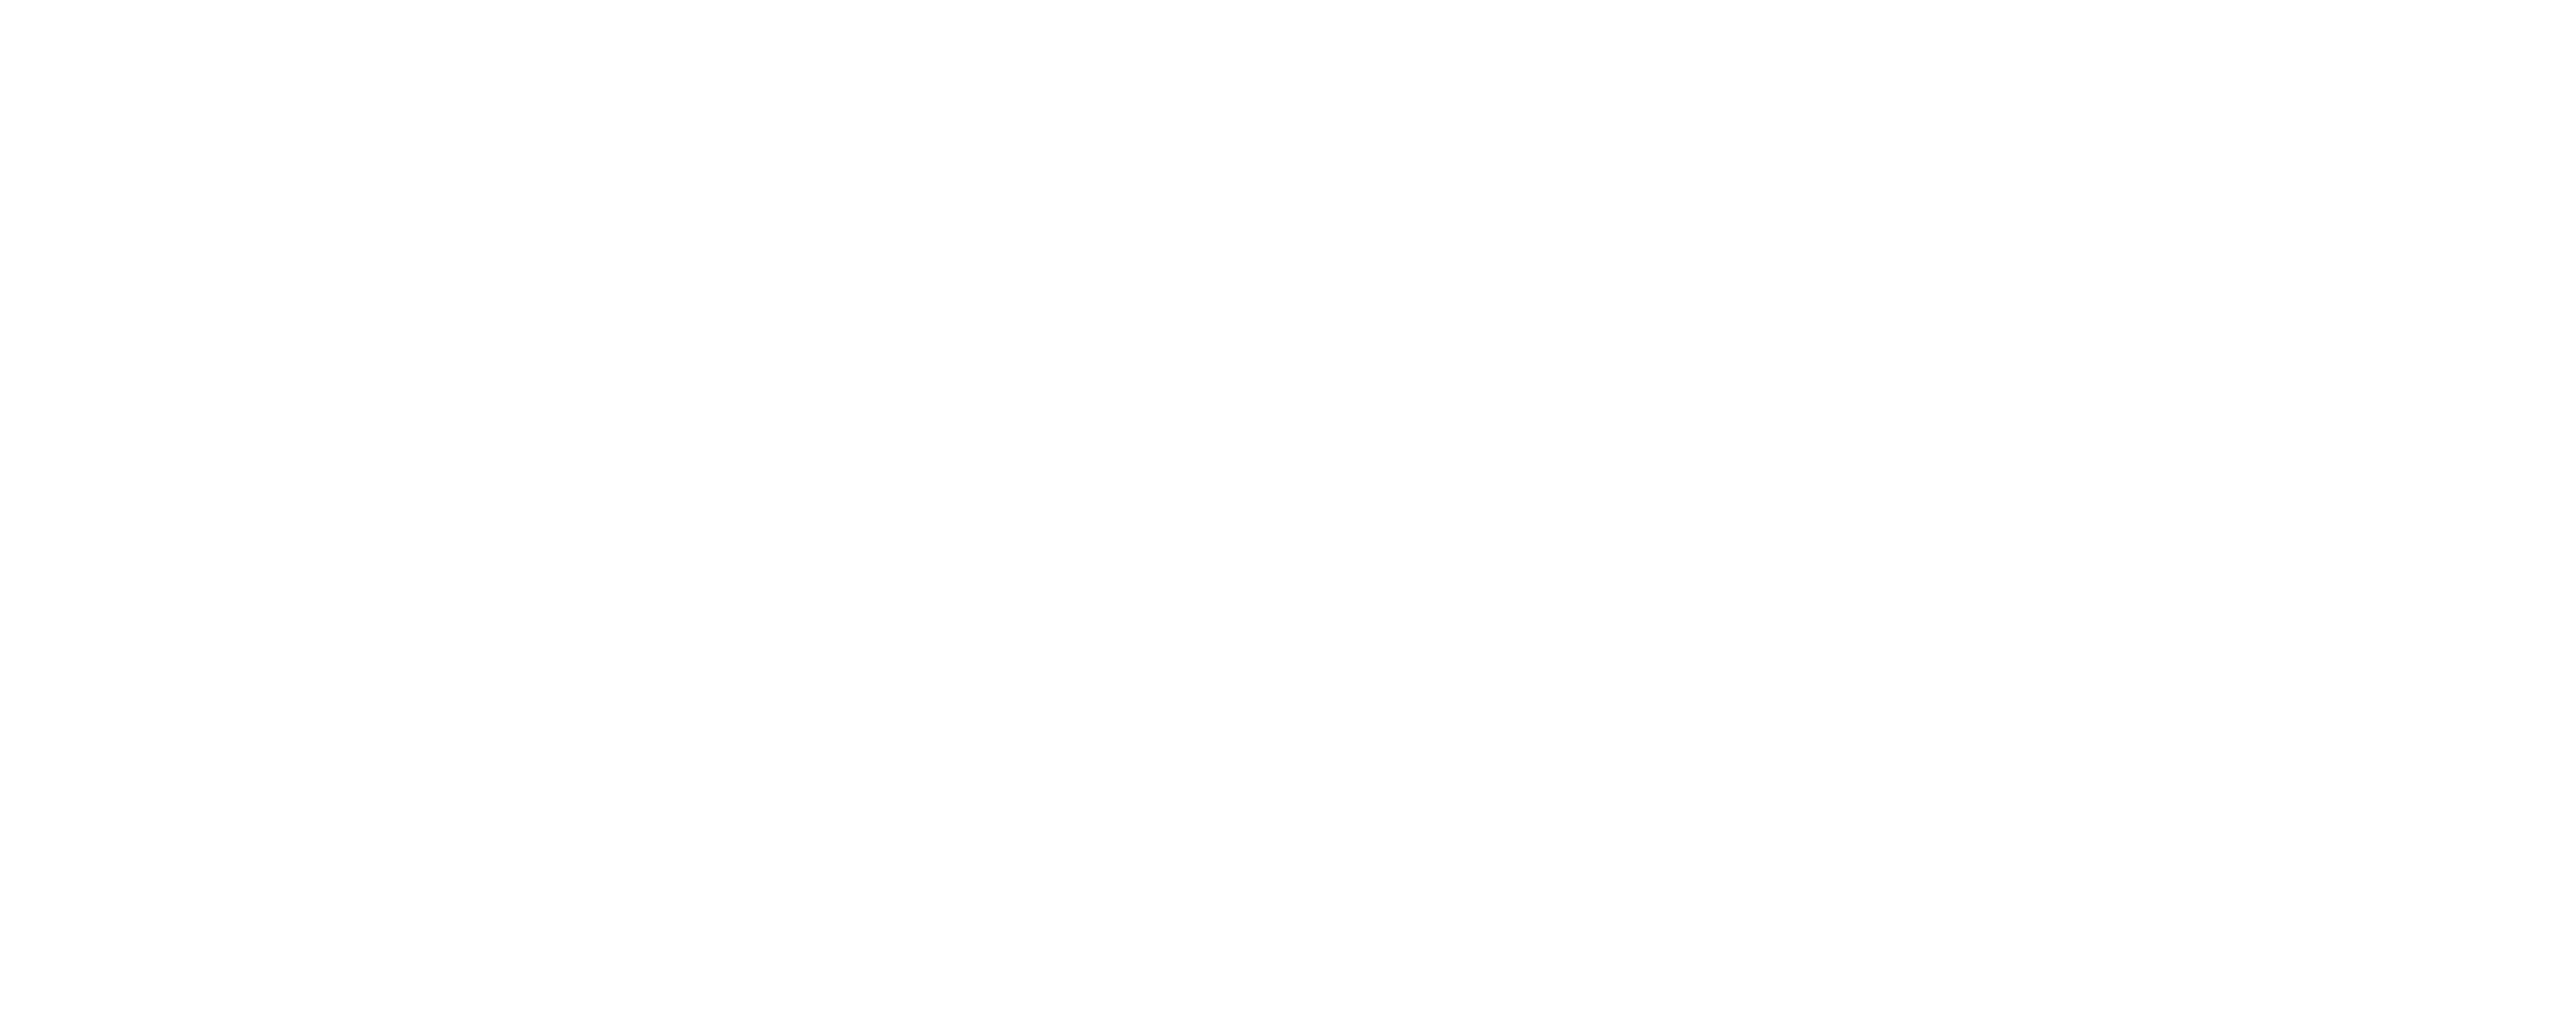 THE SWIM REPORT